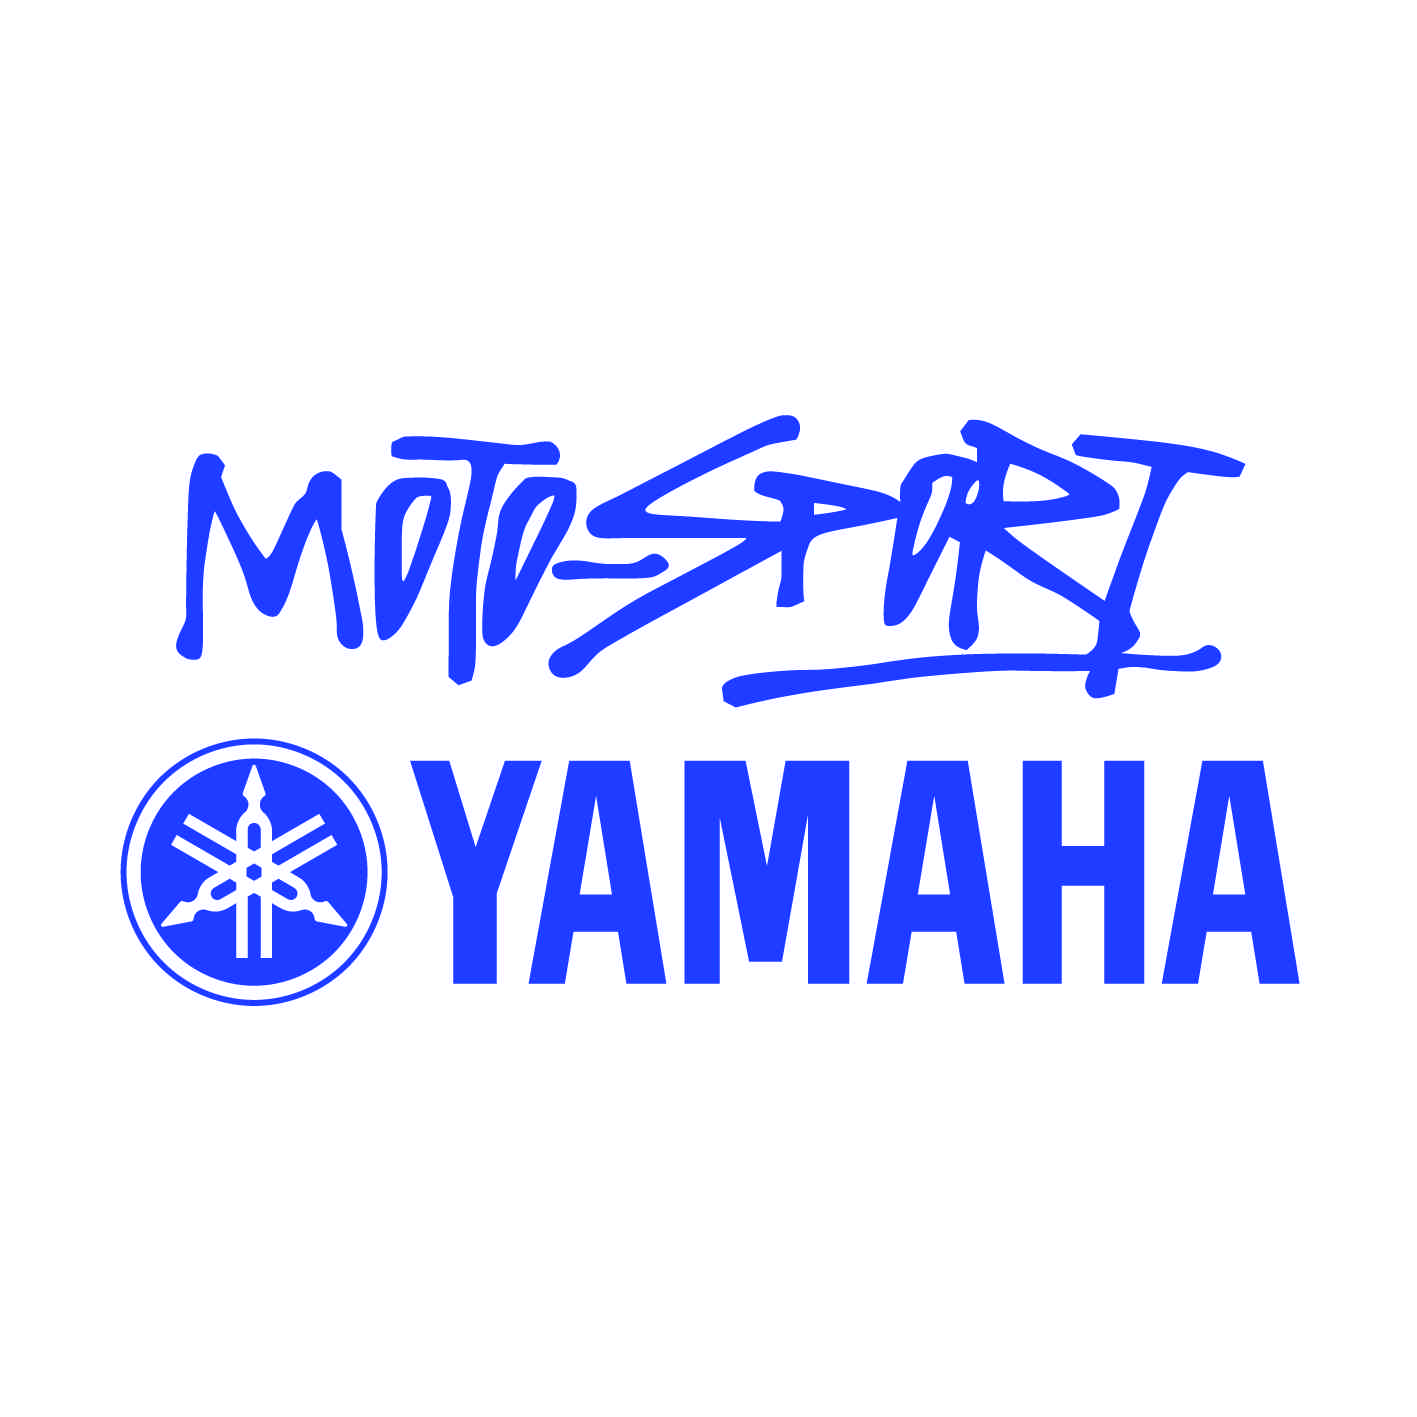 yamaha-ref3-moto-sport-yamaha-stickers-moto-casque-scooter-sticker-autocollant-adhesifs